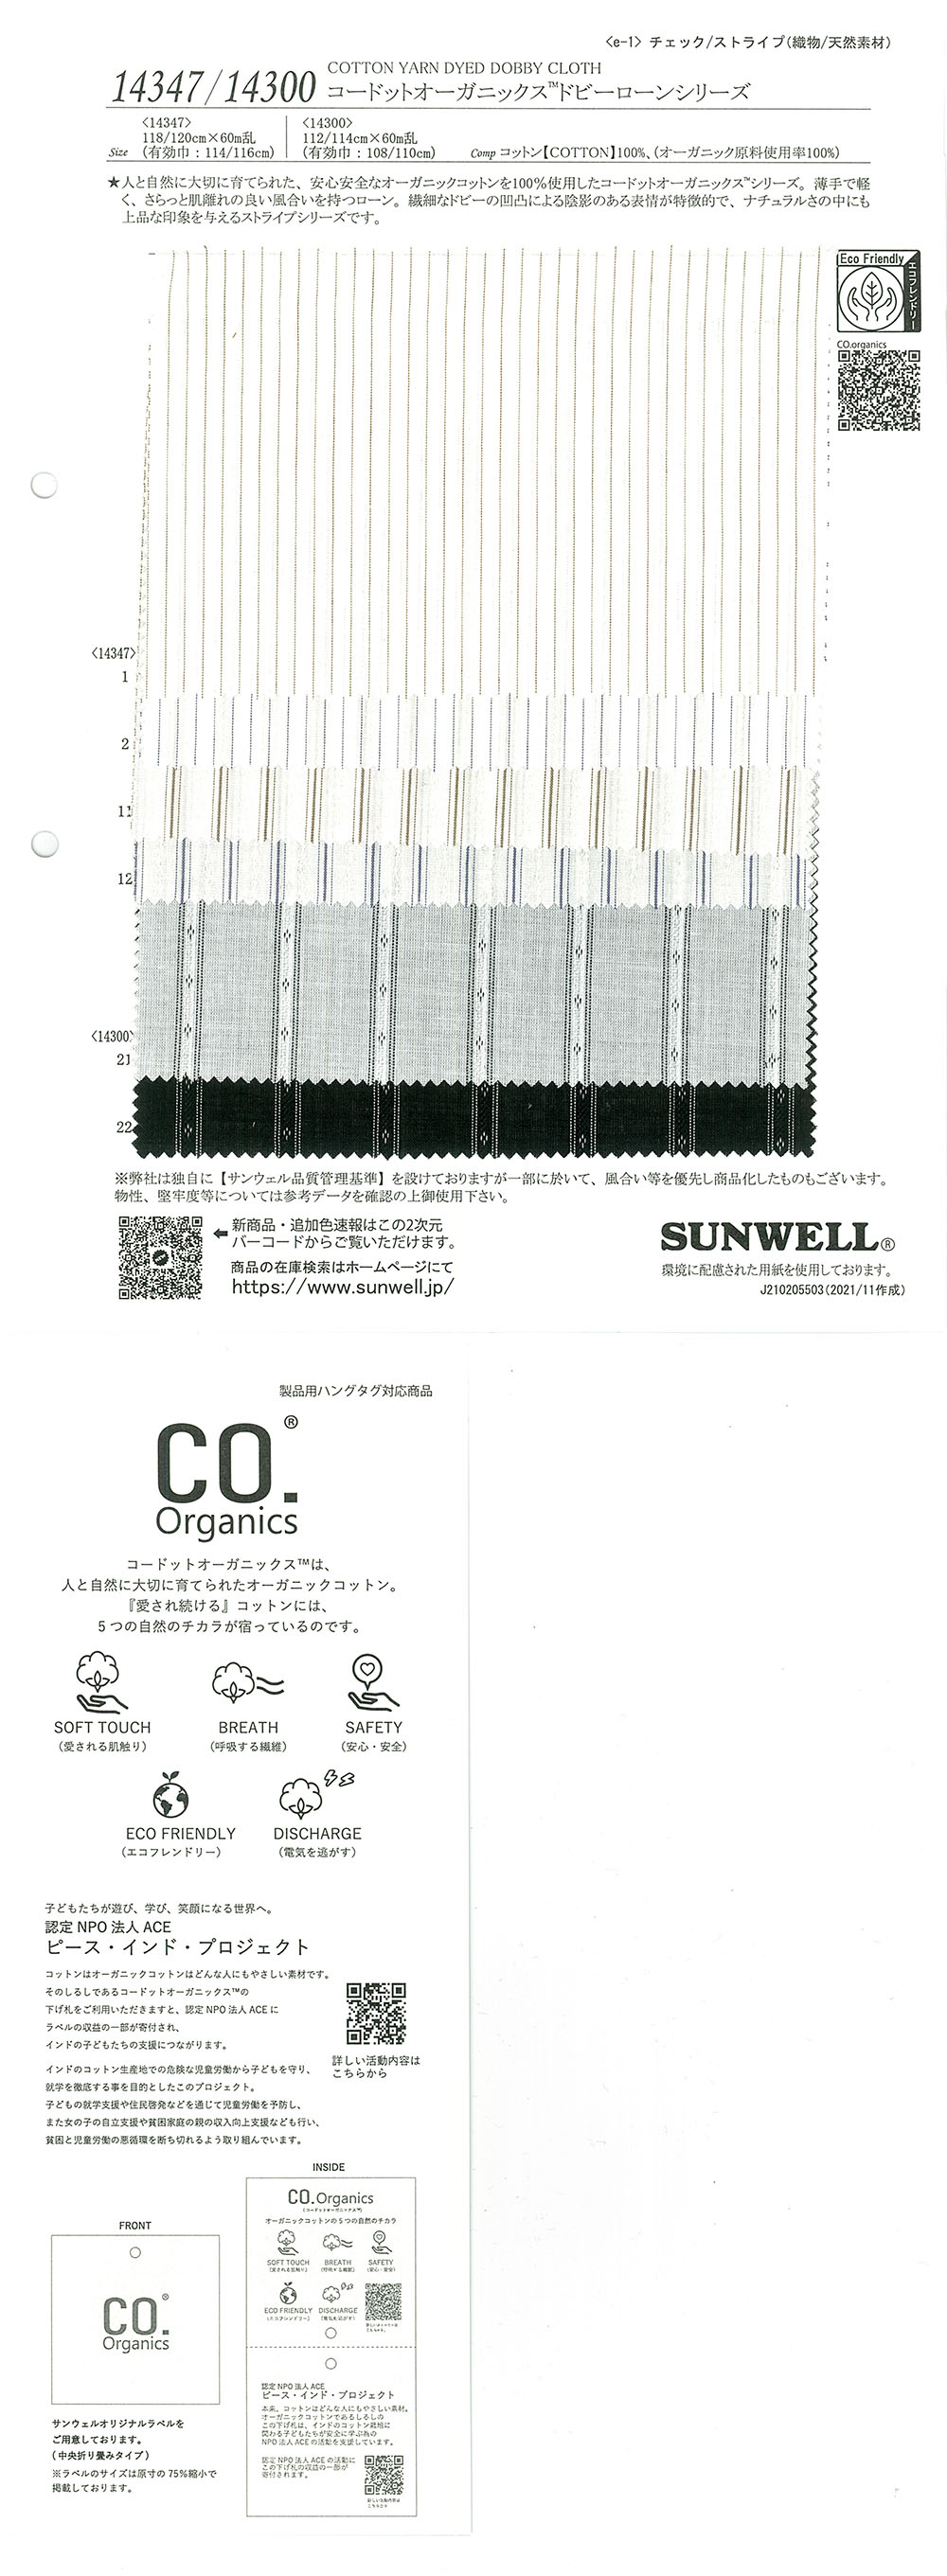 14300 Serie De Césped Dobby De Cordot Organics (R)[Fabrica Textil] SUNWELL